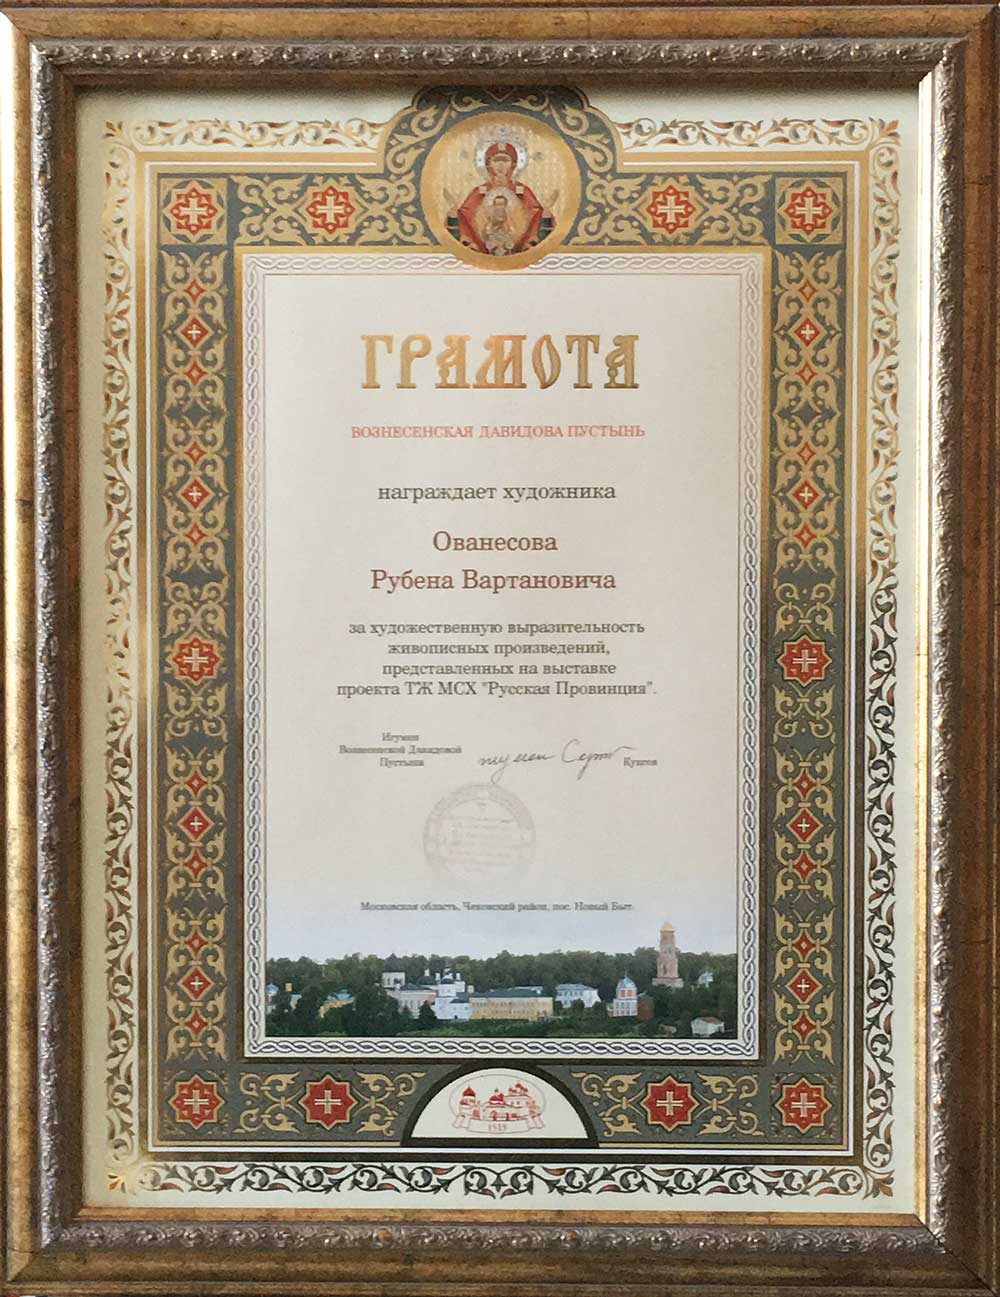 Certificate of Merit from "Voznesenskaya Davidova Postynj" monastery